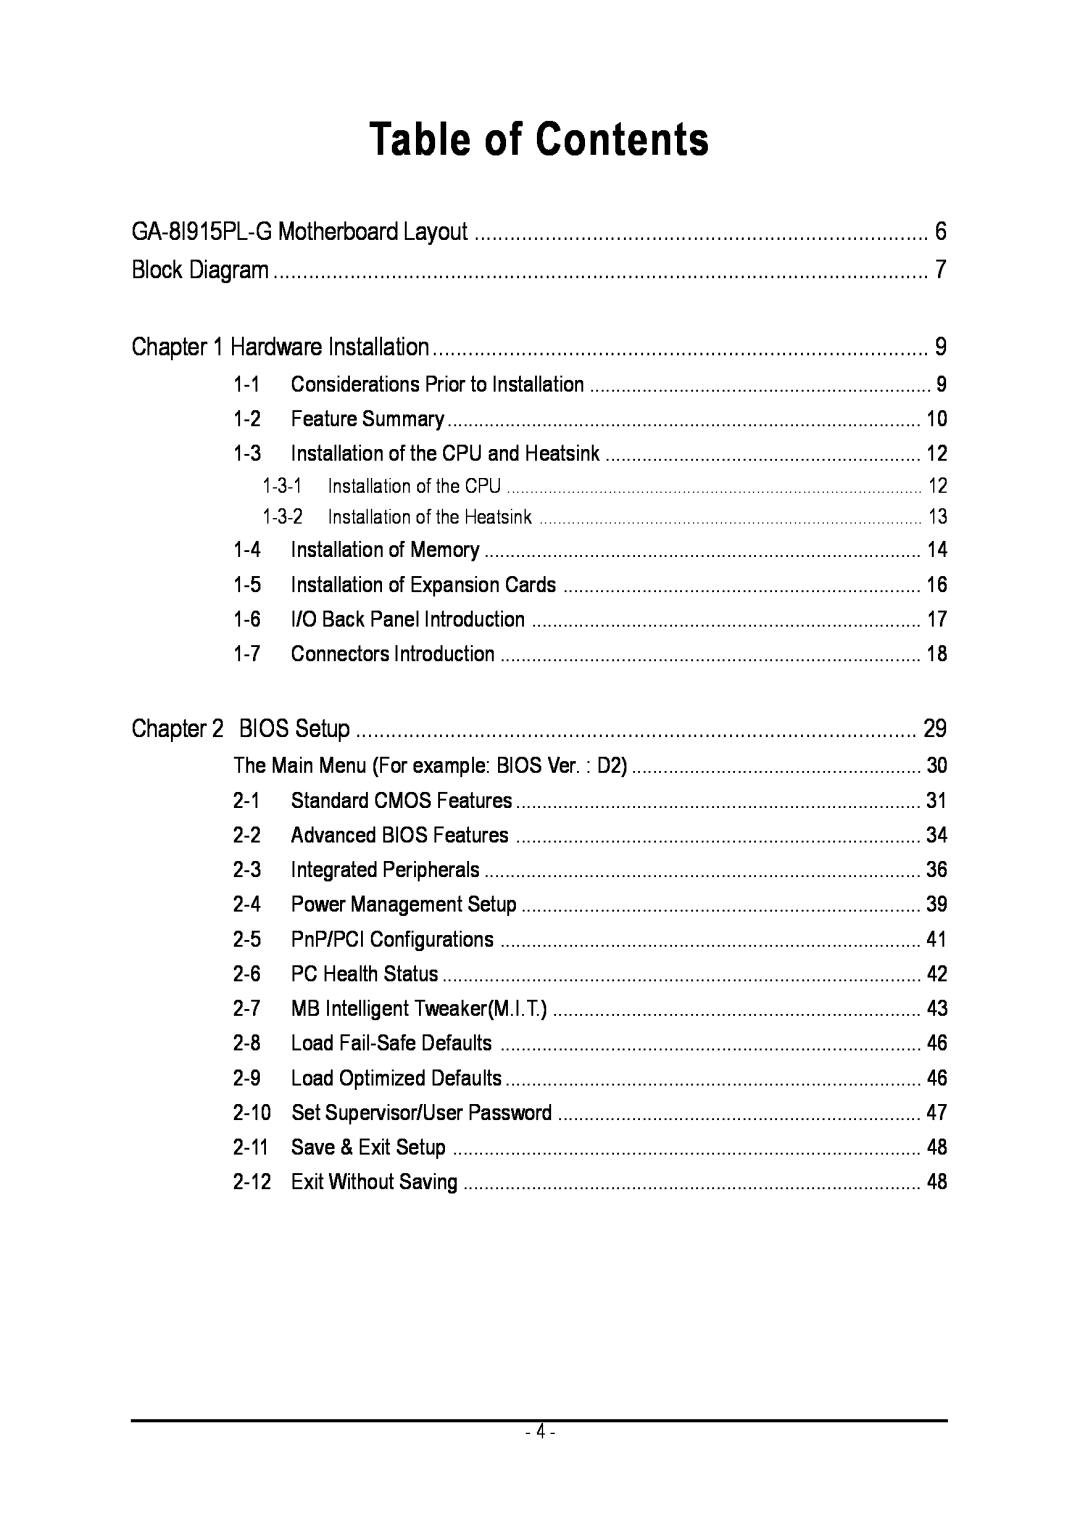 Intel GA-8I915PL-G user manual Table of Contents 